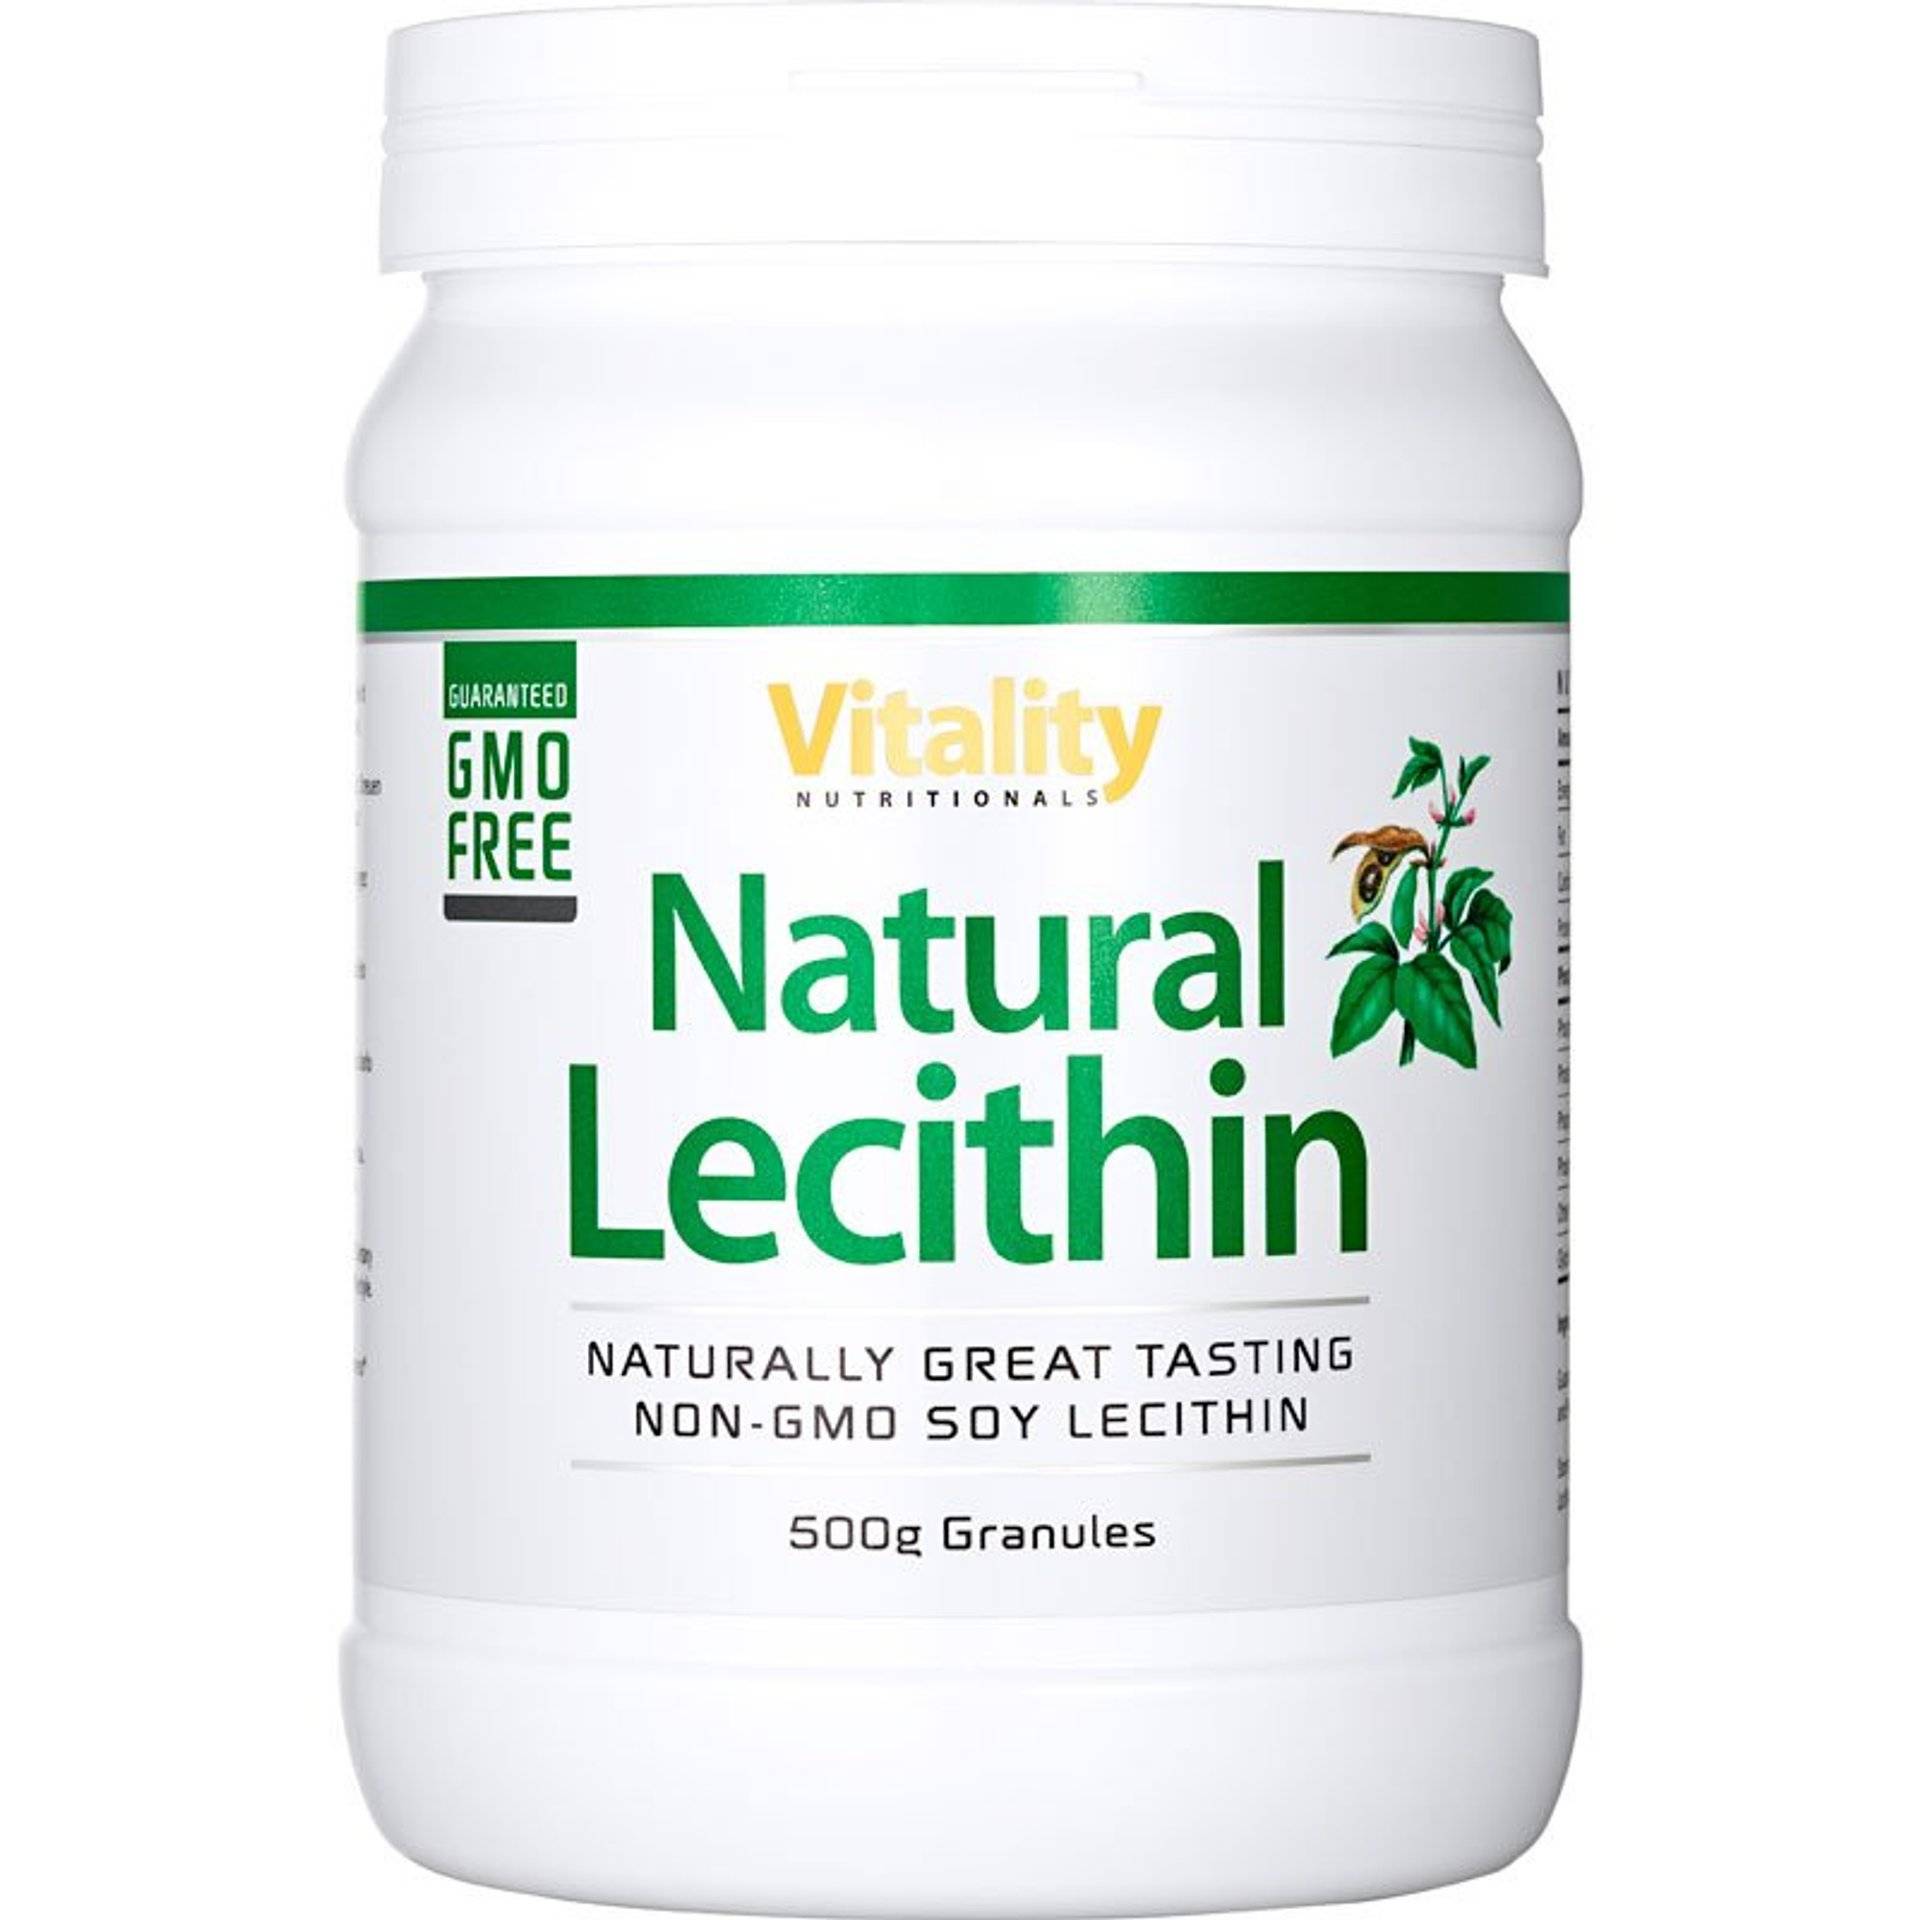 vitality-nutritionals-natural-lecithin_2.jpg